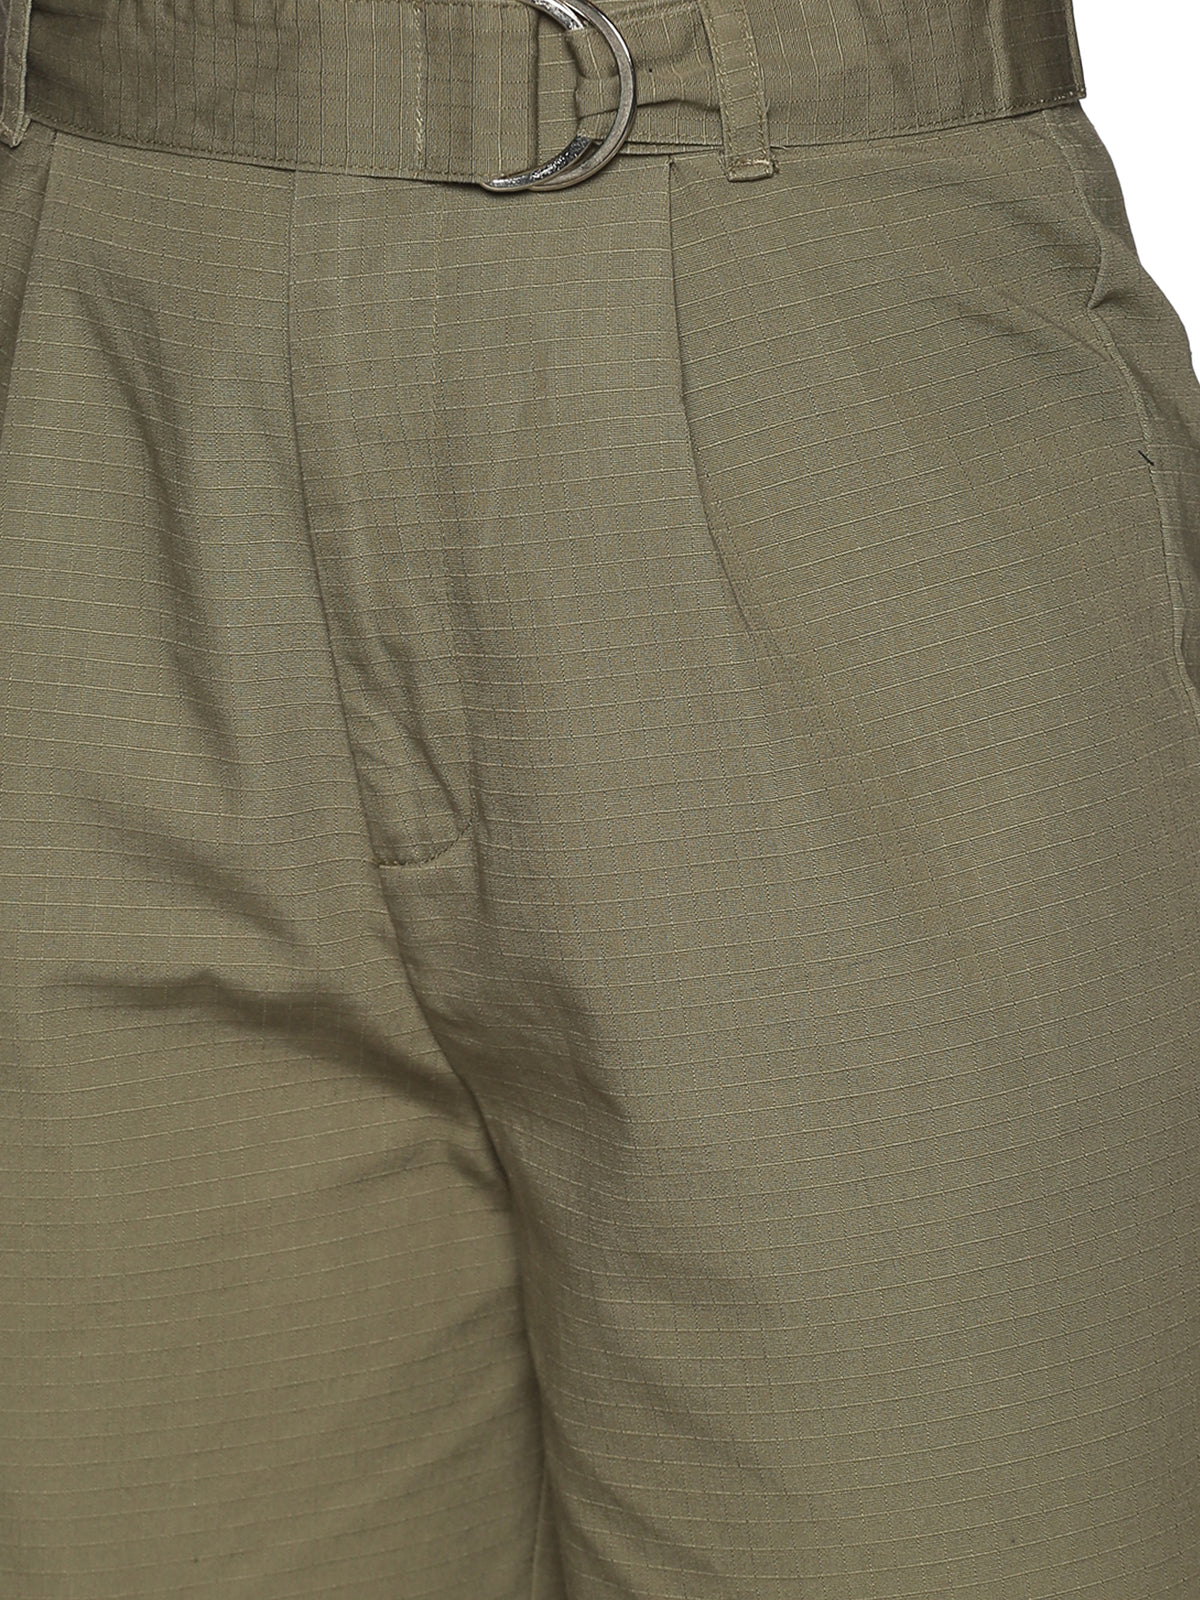 Olive High Waist Cotton Pants